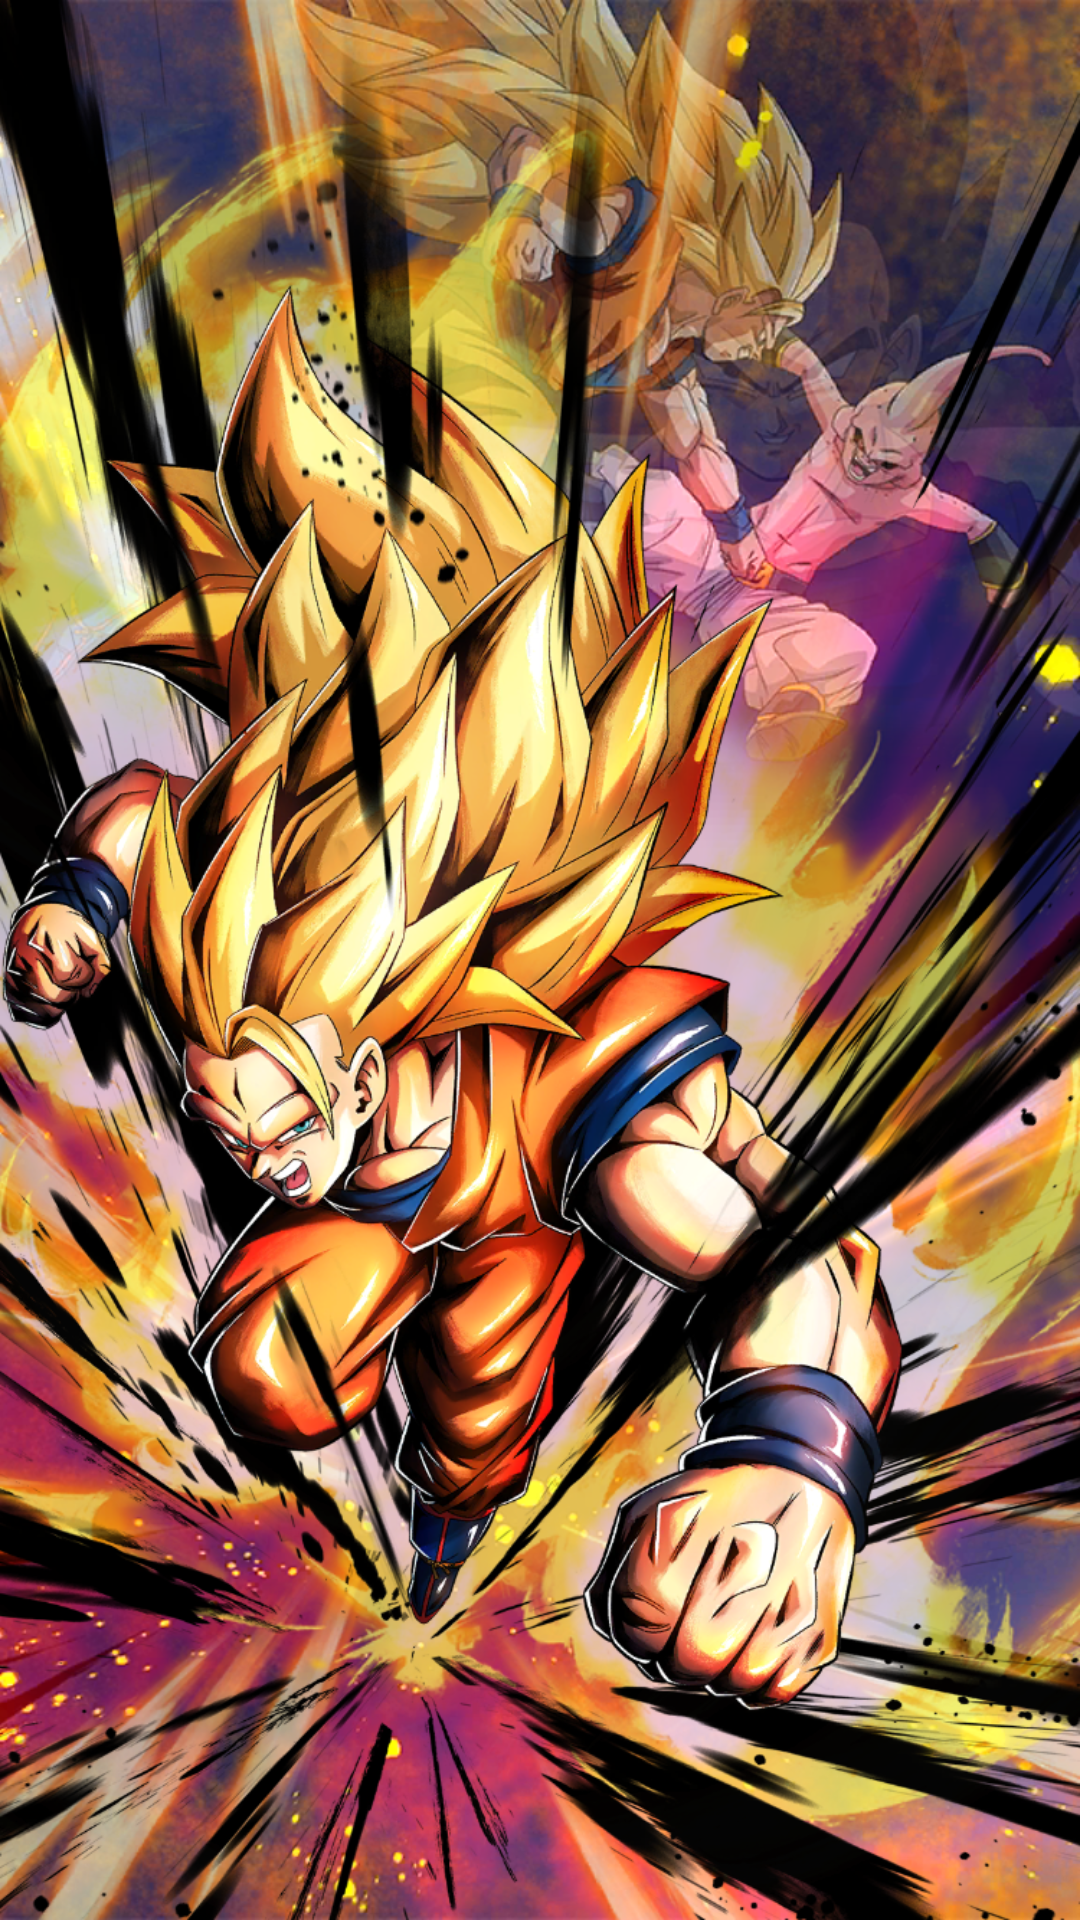 Super Saiyan 3 Goku (DBL17-05S), Characters, Dragon Ball Legends